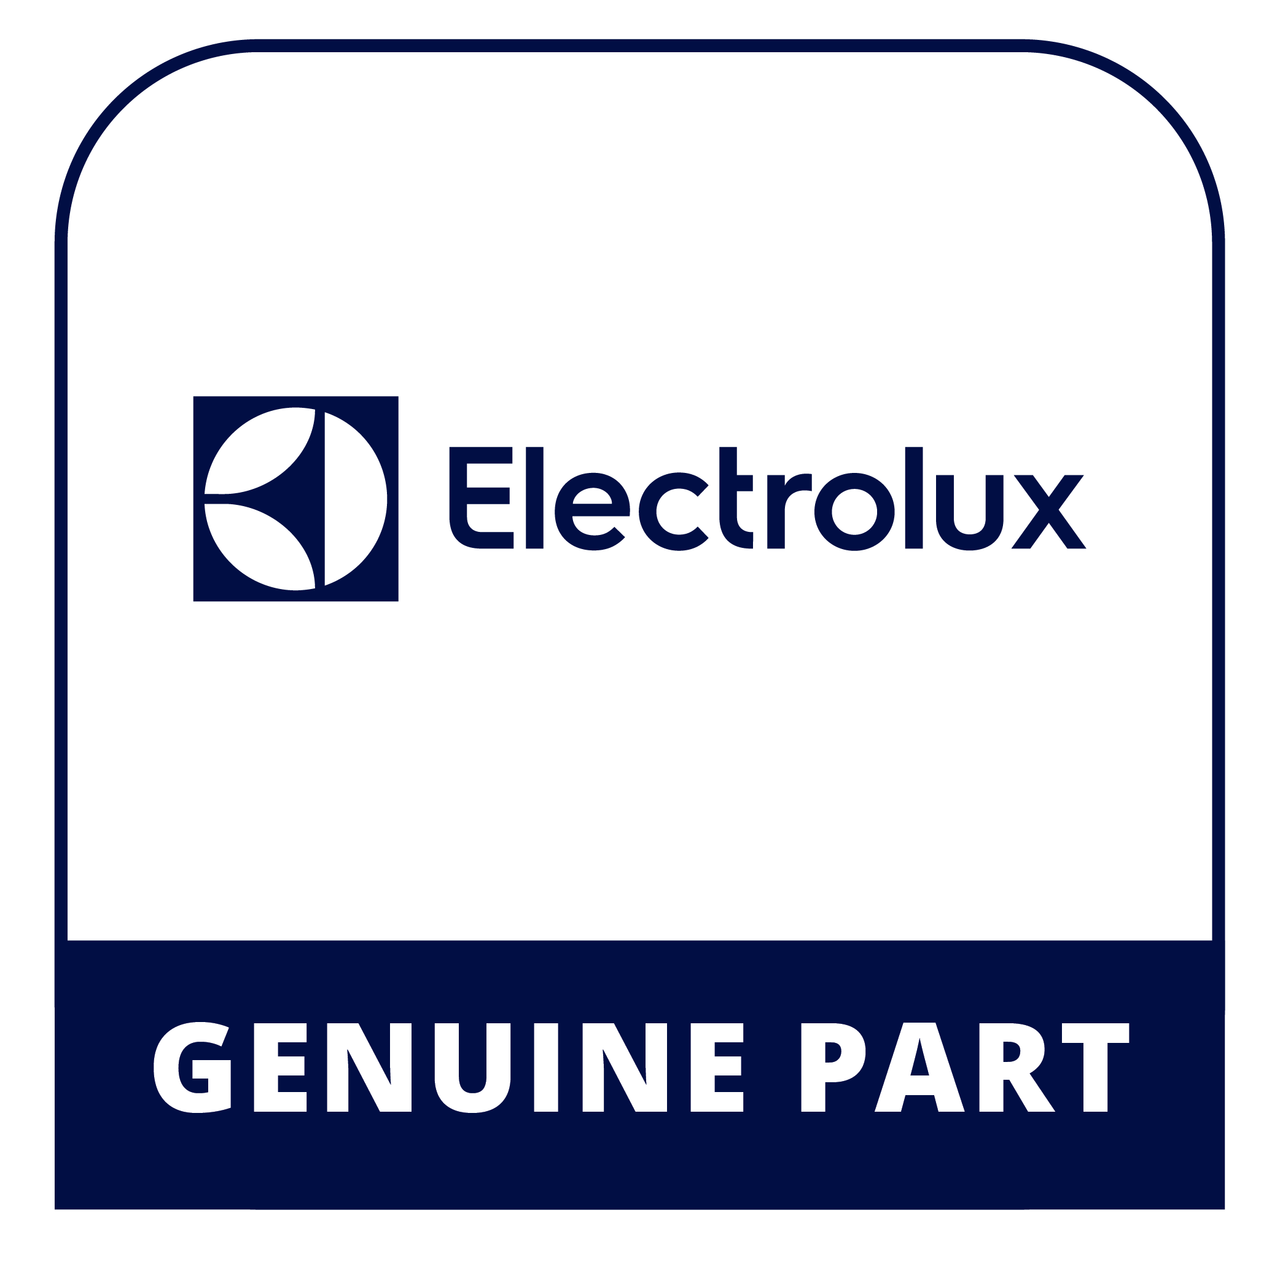 Frigidaire - Electrolux 5304531928 Front Panel - Genuine Electrolux Part